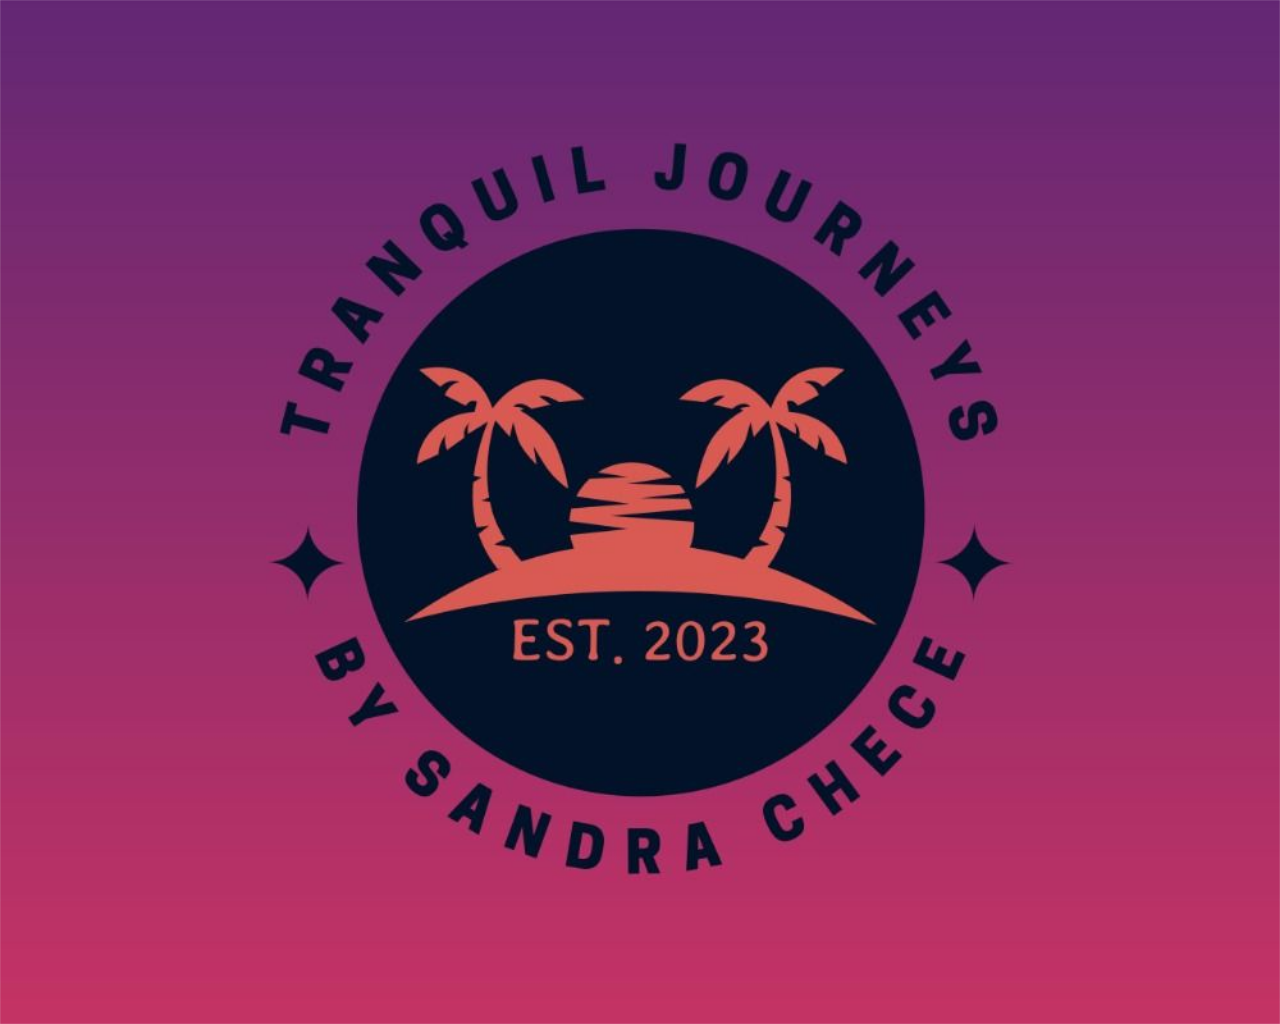 Tranquility Journeys's logo